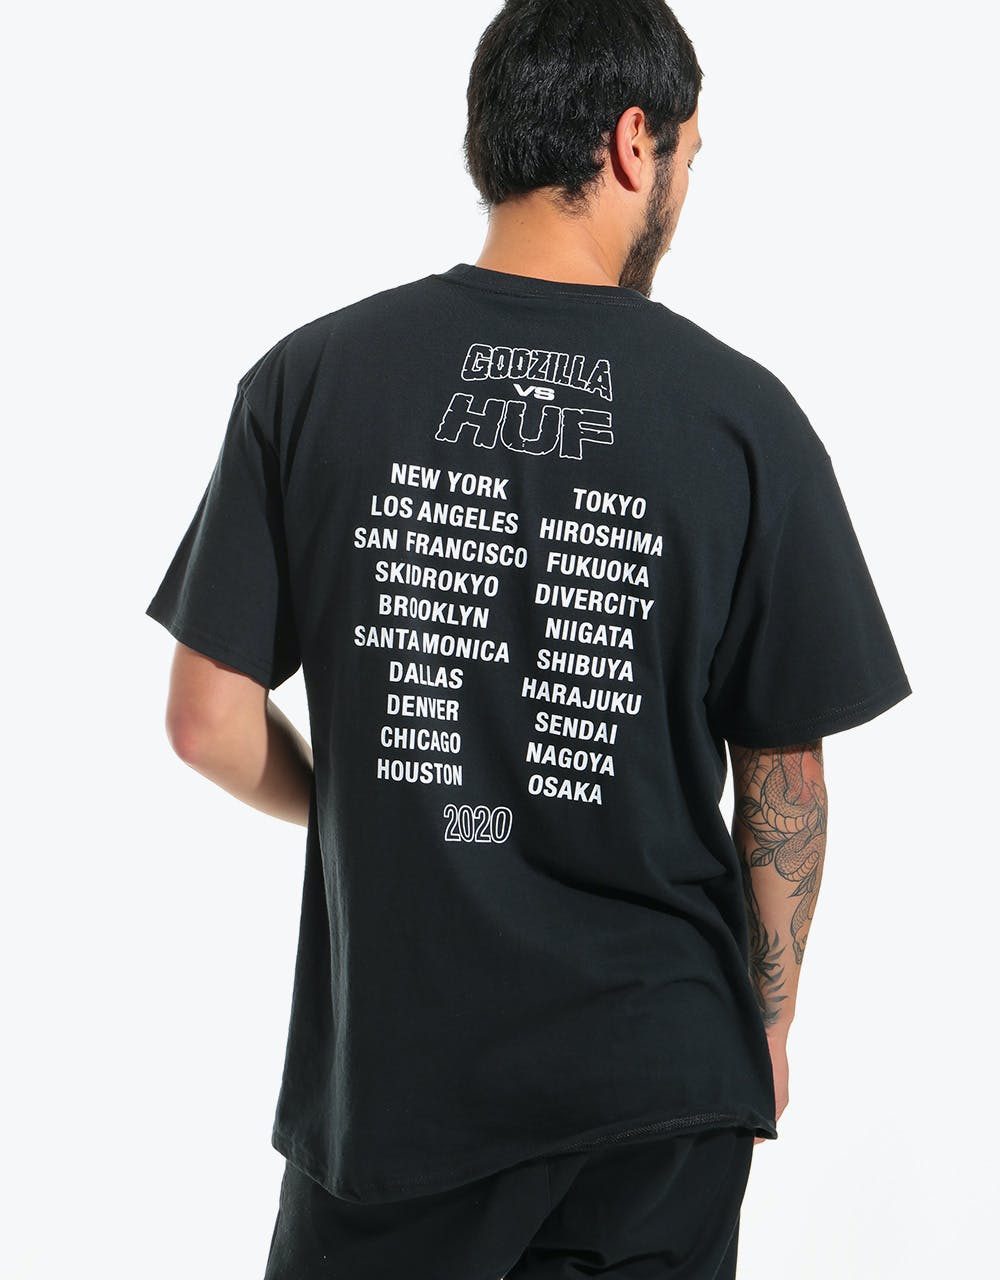 HUF vs Godzilla Tour T-Shirt - Black